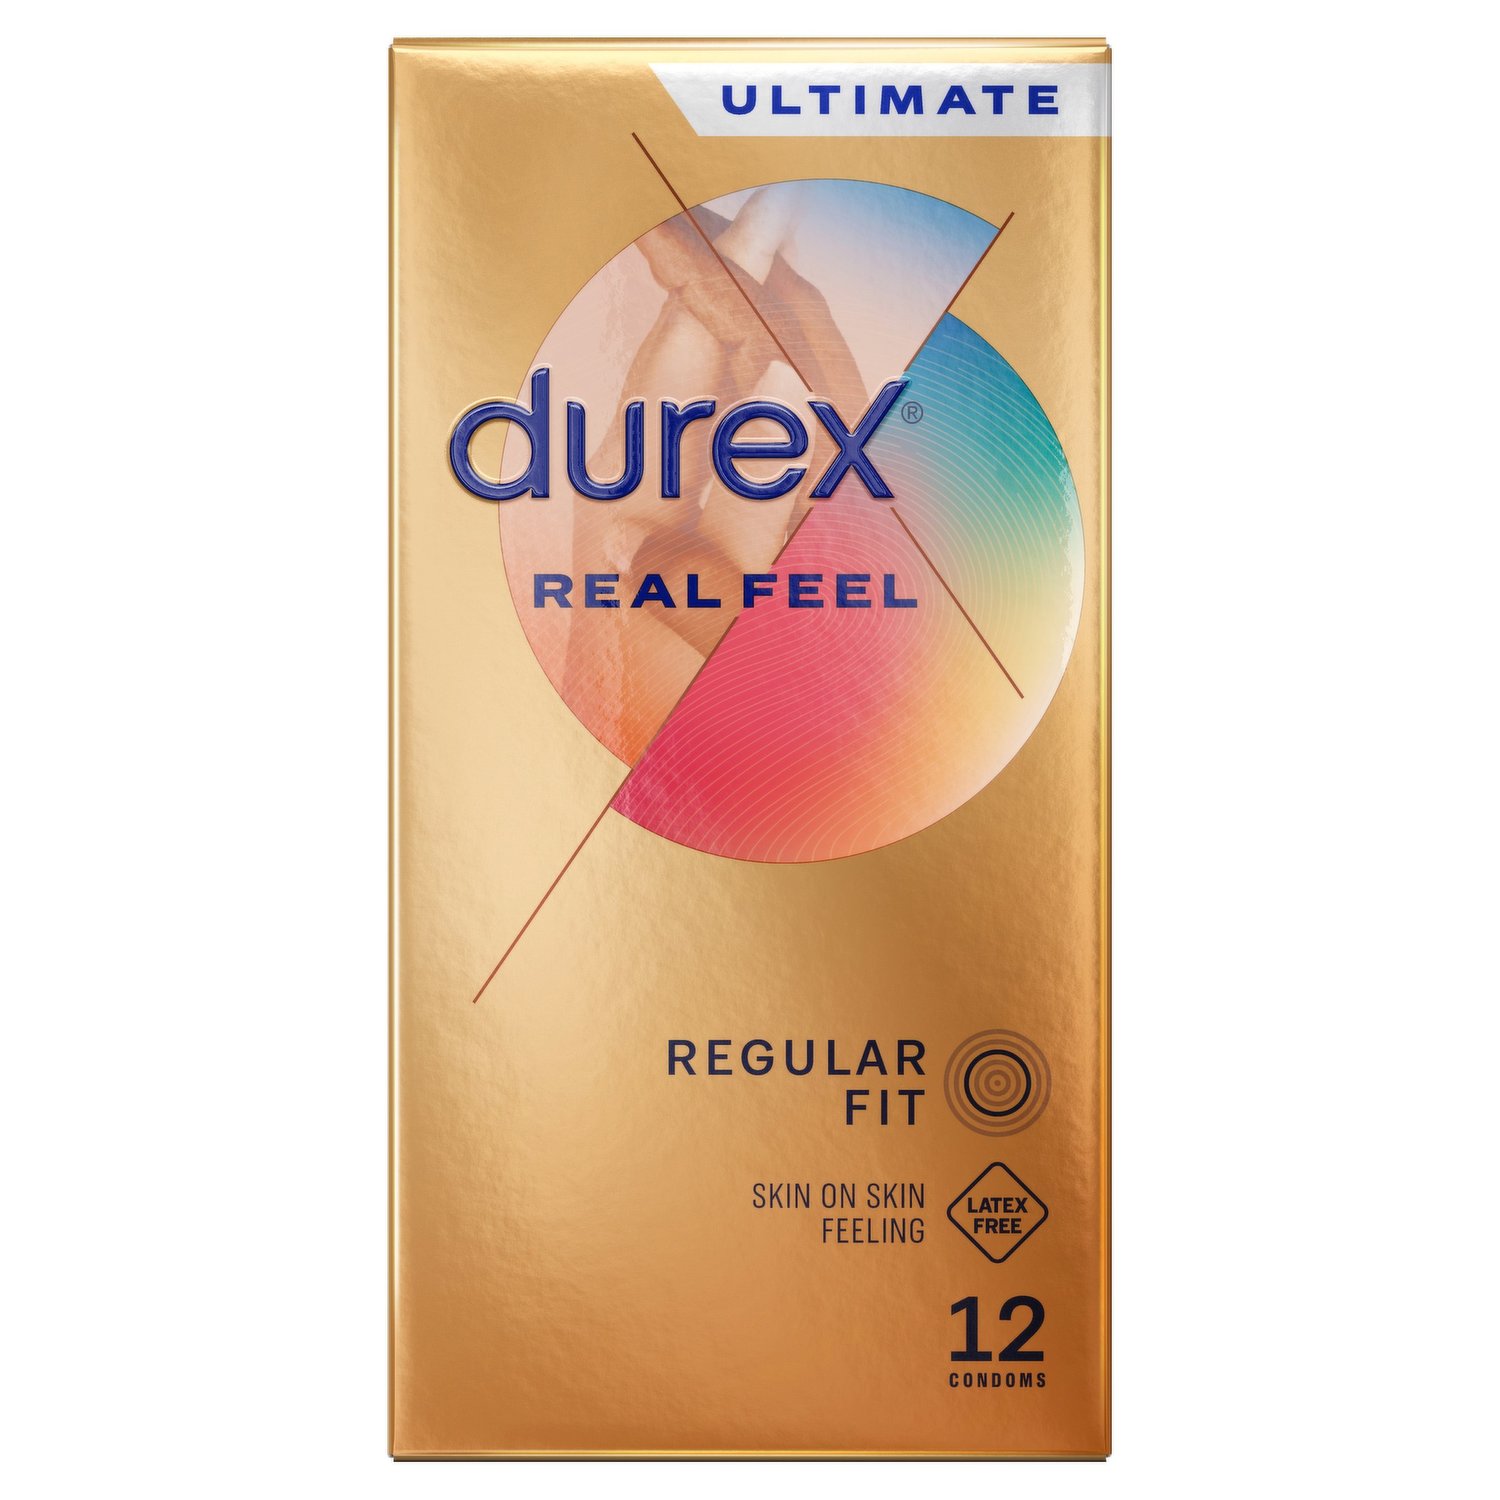 Durex Real Feel Ultimate 12 Condoms - Dunnes Stores